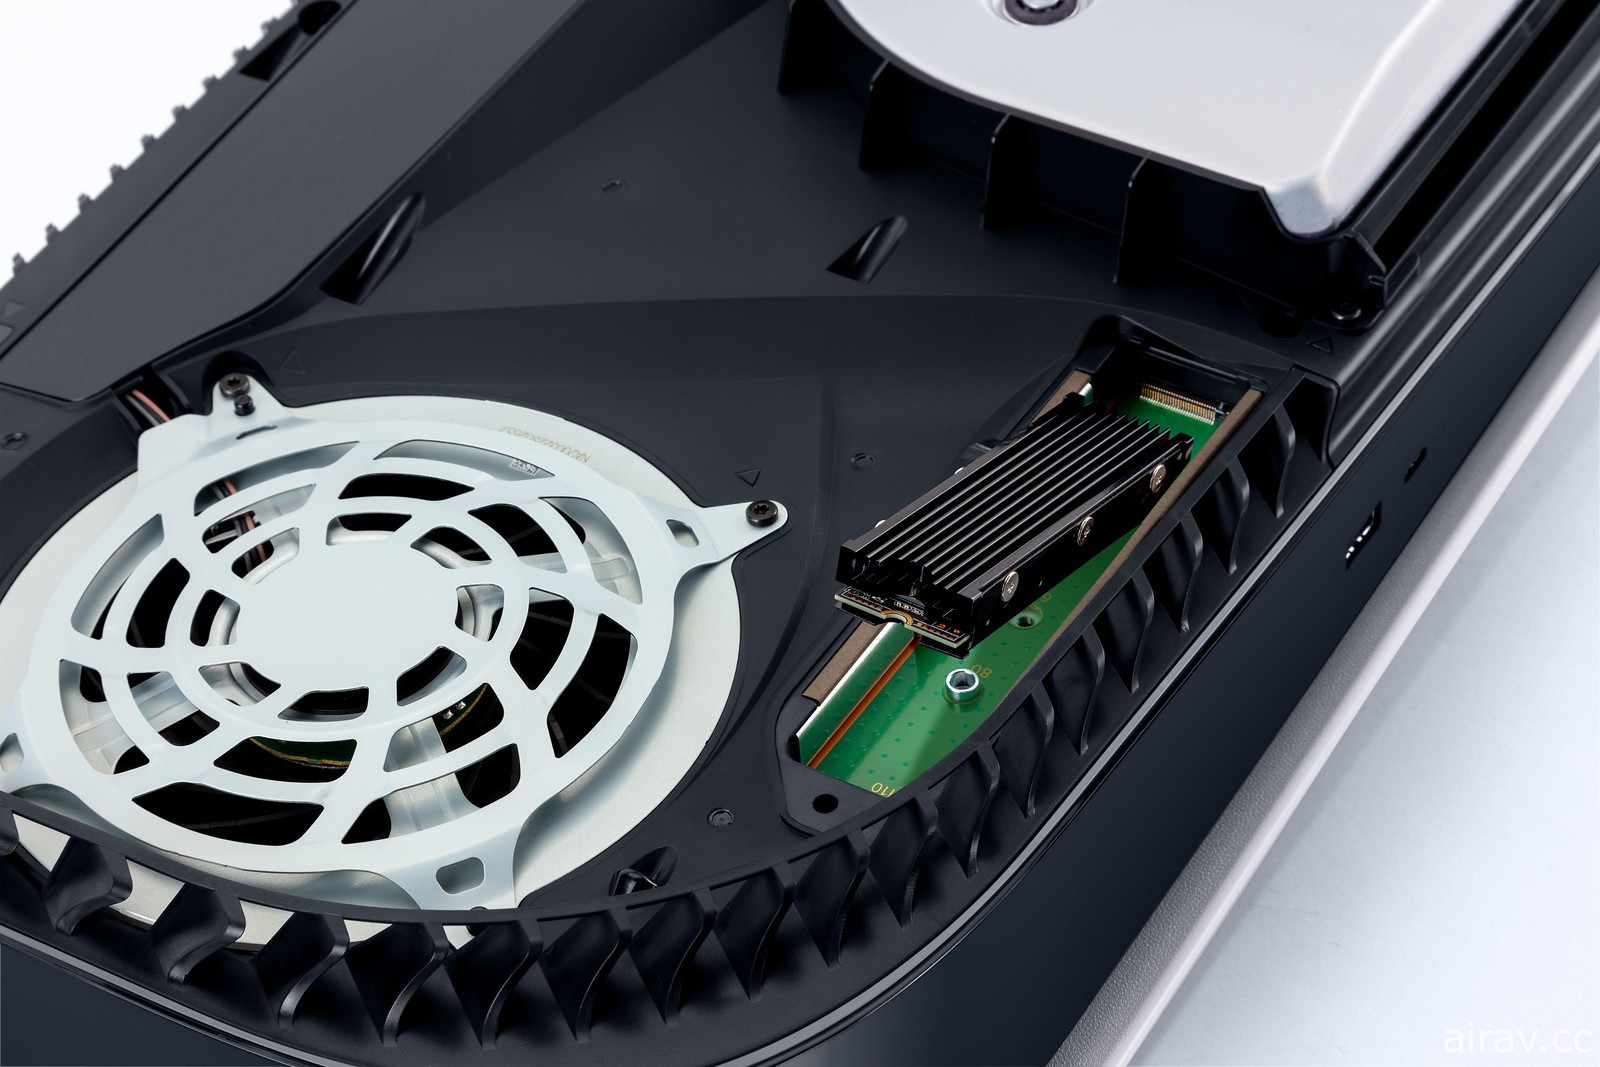 PS5 釋出第二輪重大系統軟體更新 支援喇叭 3D 音效、M.2 SSD 擴充與行動網路遙控遊玩